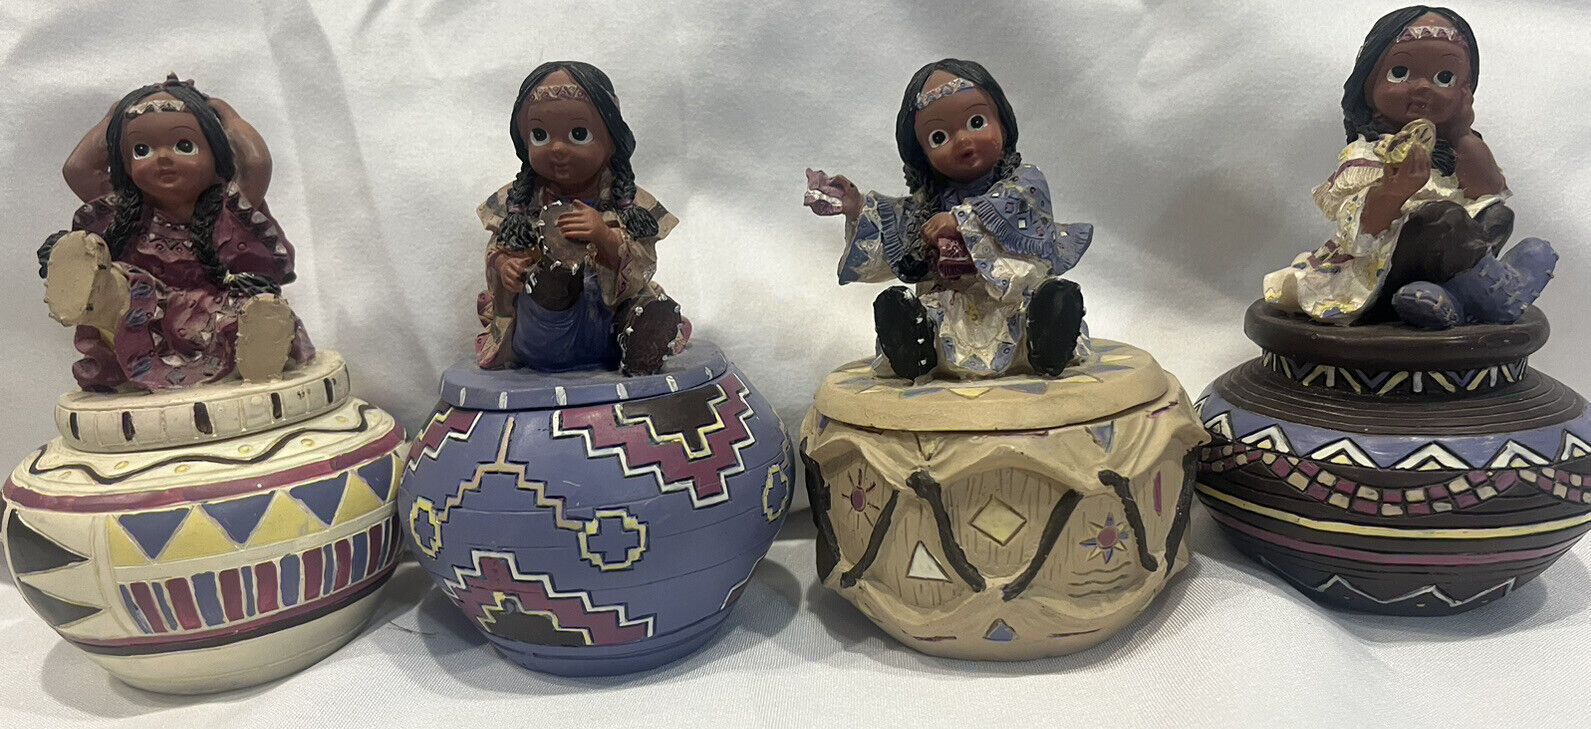 Vintage Native American Indian Trinket Jewelry Boxes Figurines Set Of 4